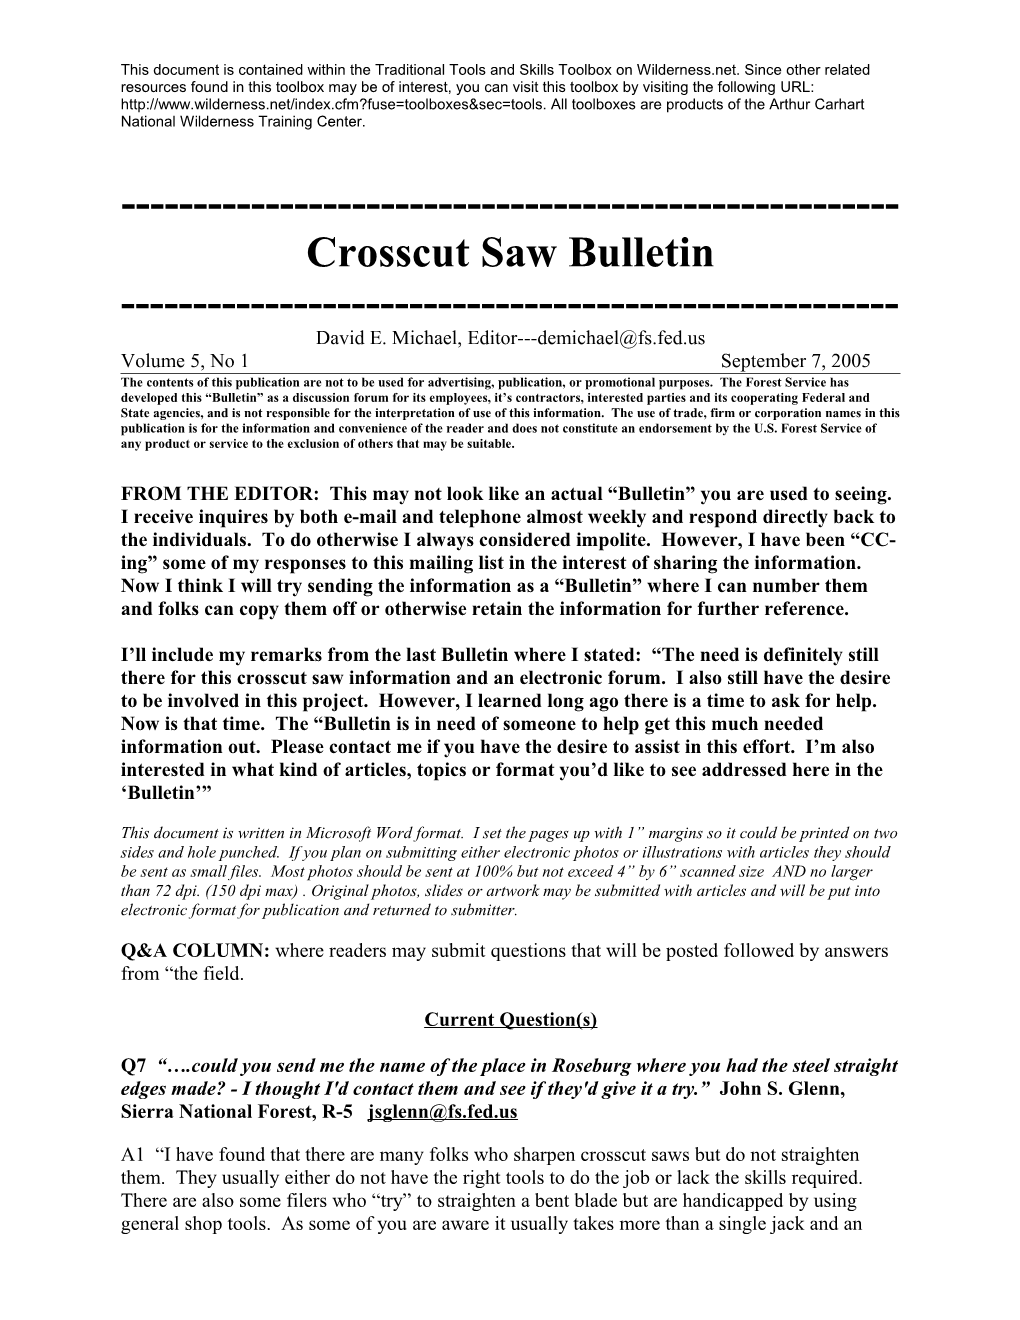 Crosscut Saw Bulletin